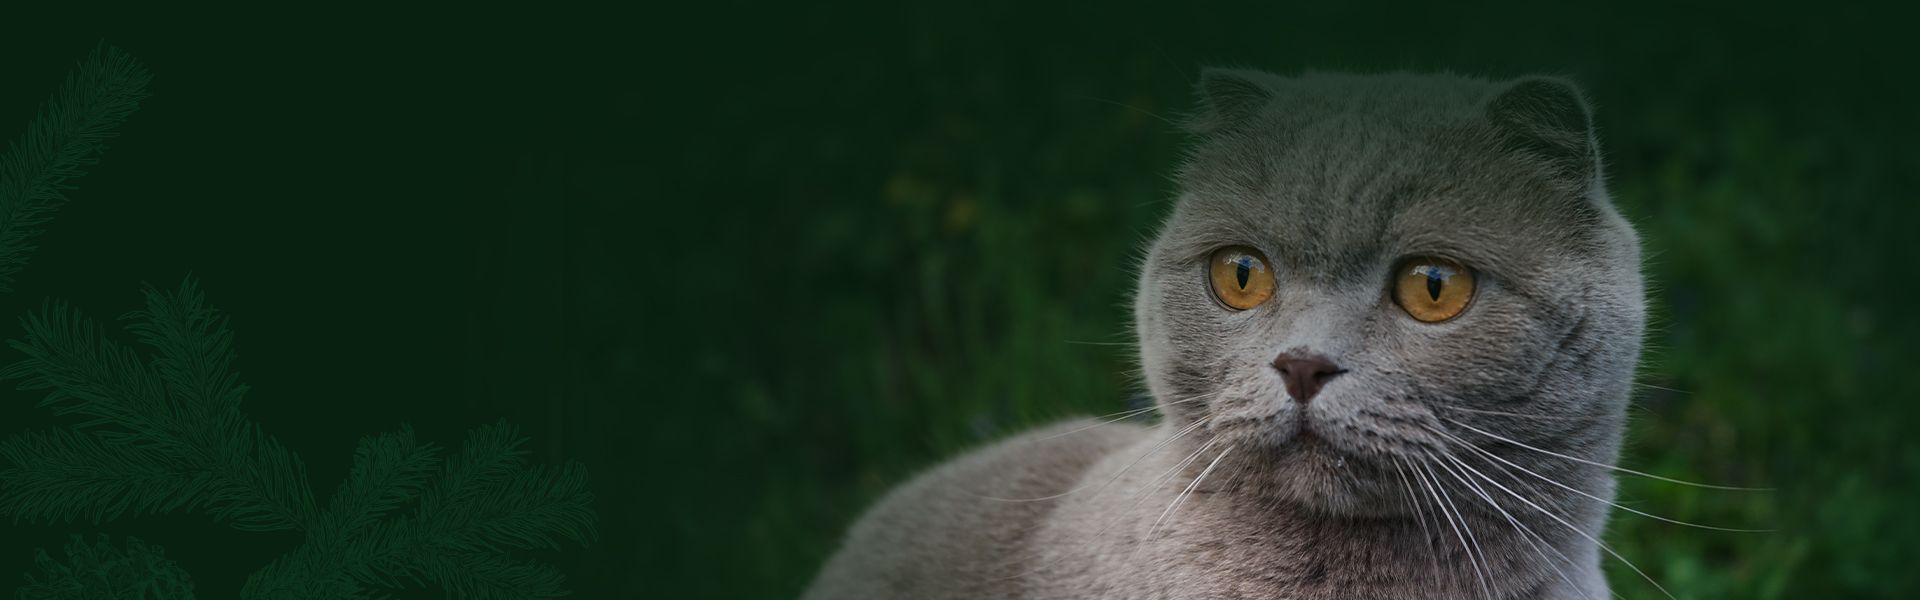 Scottish gray cat looking at something